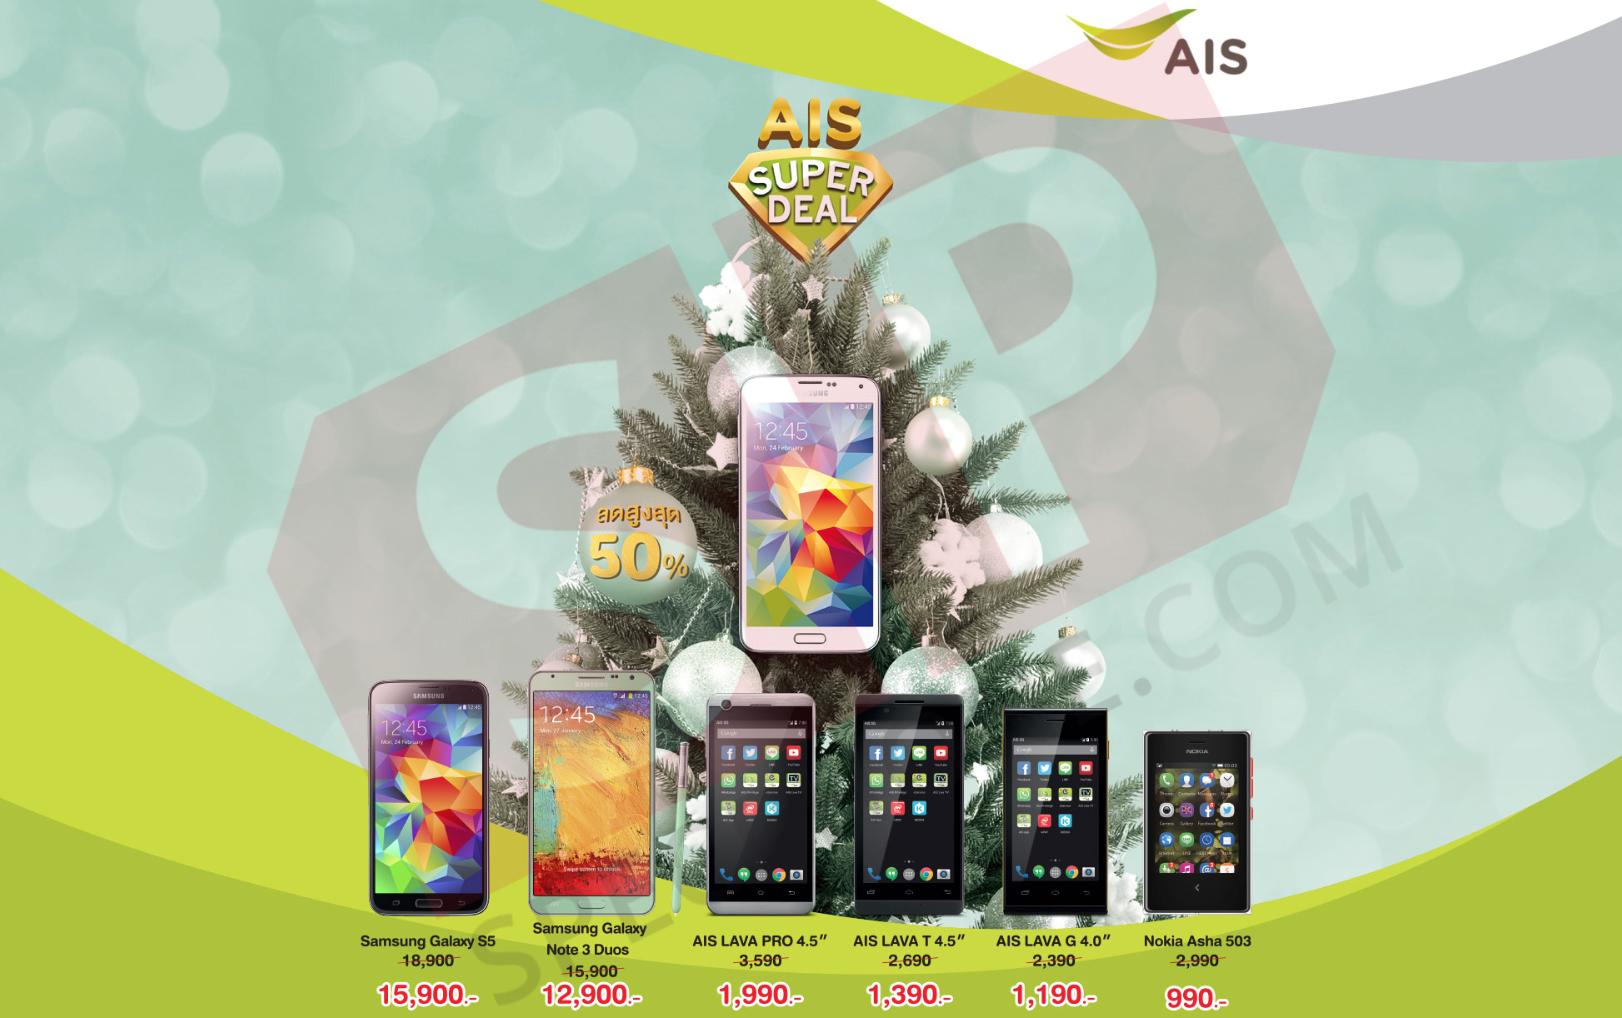 AIS Super Deal จัดเต็มต้อนรับปีใหม่ มือถือลดราคาเพียบ อาทิ iPhone 6, iPhone 6 Plus, Galaxy S5, และอีกหลายรุ่น